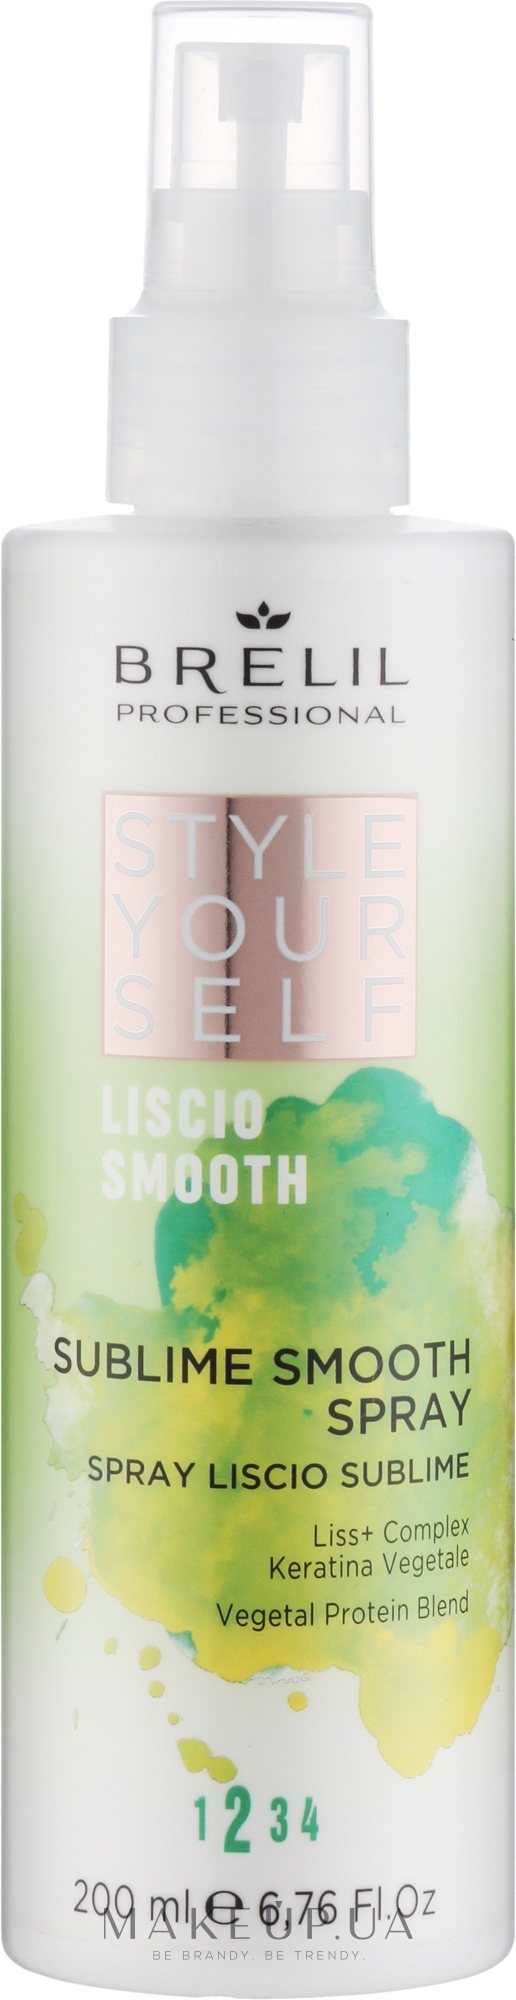 Розгладжувальний спрей для волосся - Brelil Style Yourself Smooth Sublime Smooth Spray — фото 200ml